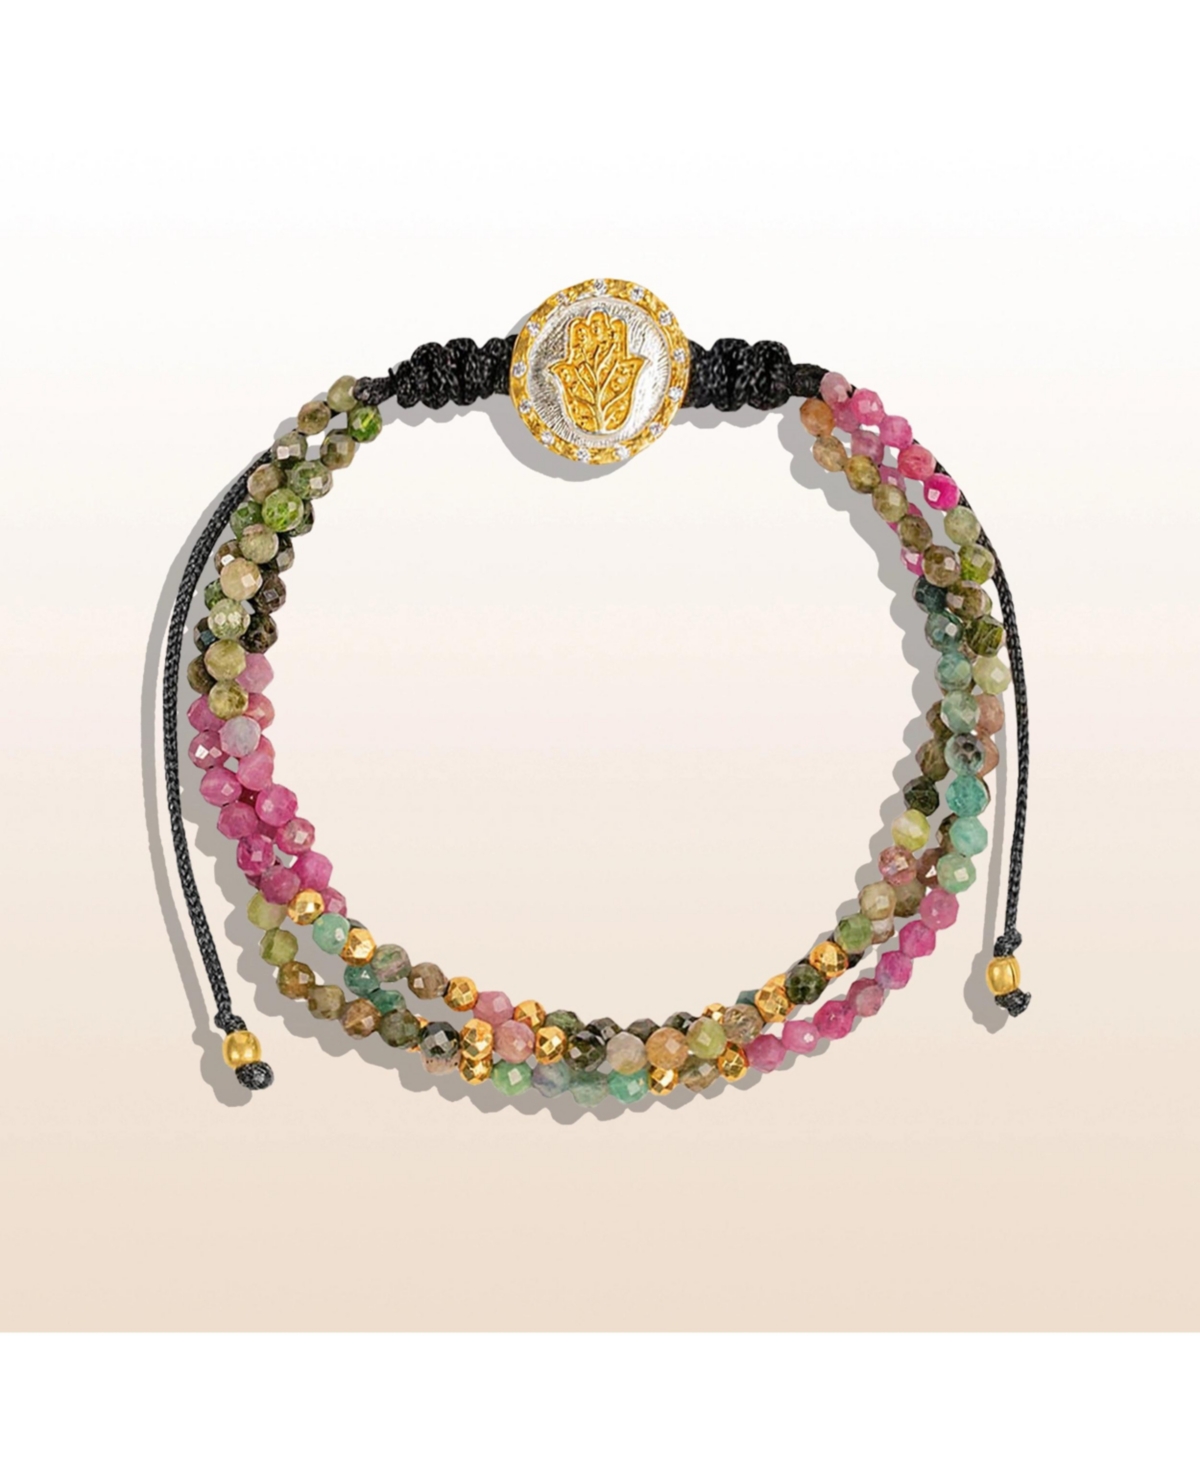 Peaceful Guidance - Tourmaline Hamsa Charm Bracelet - Gold/silver/black/turquoise